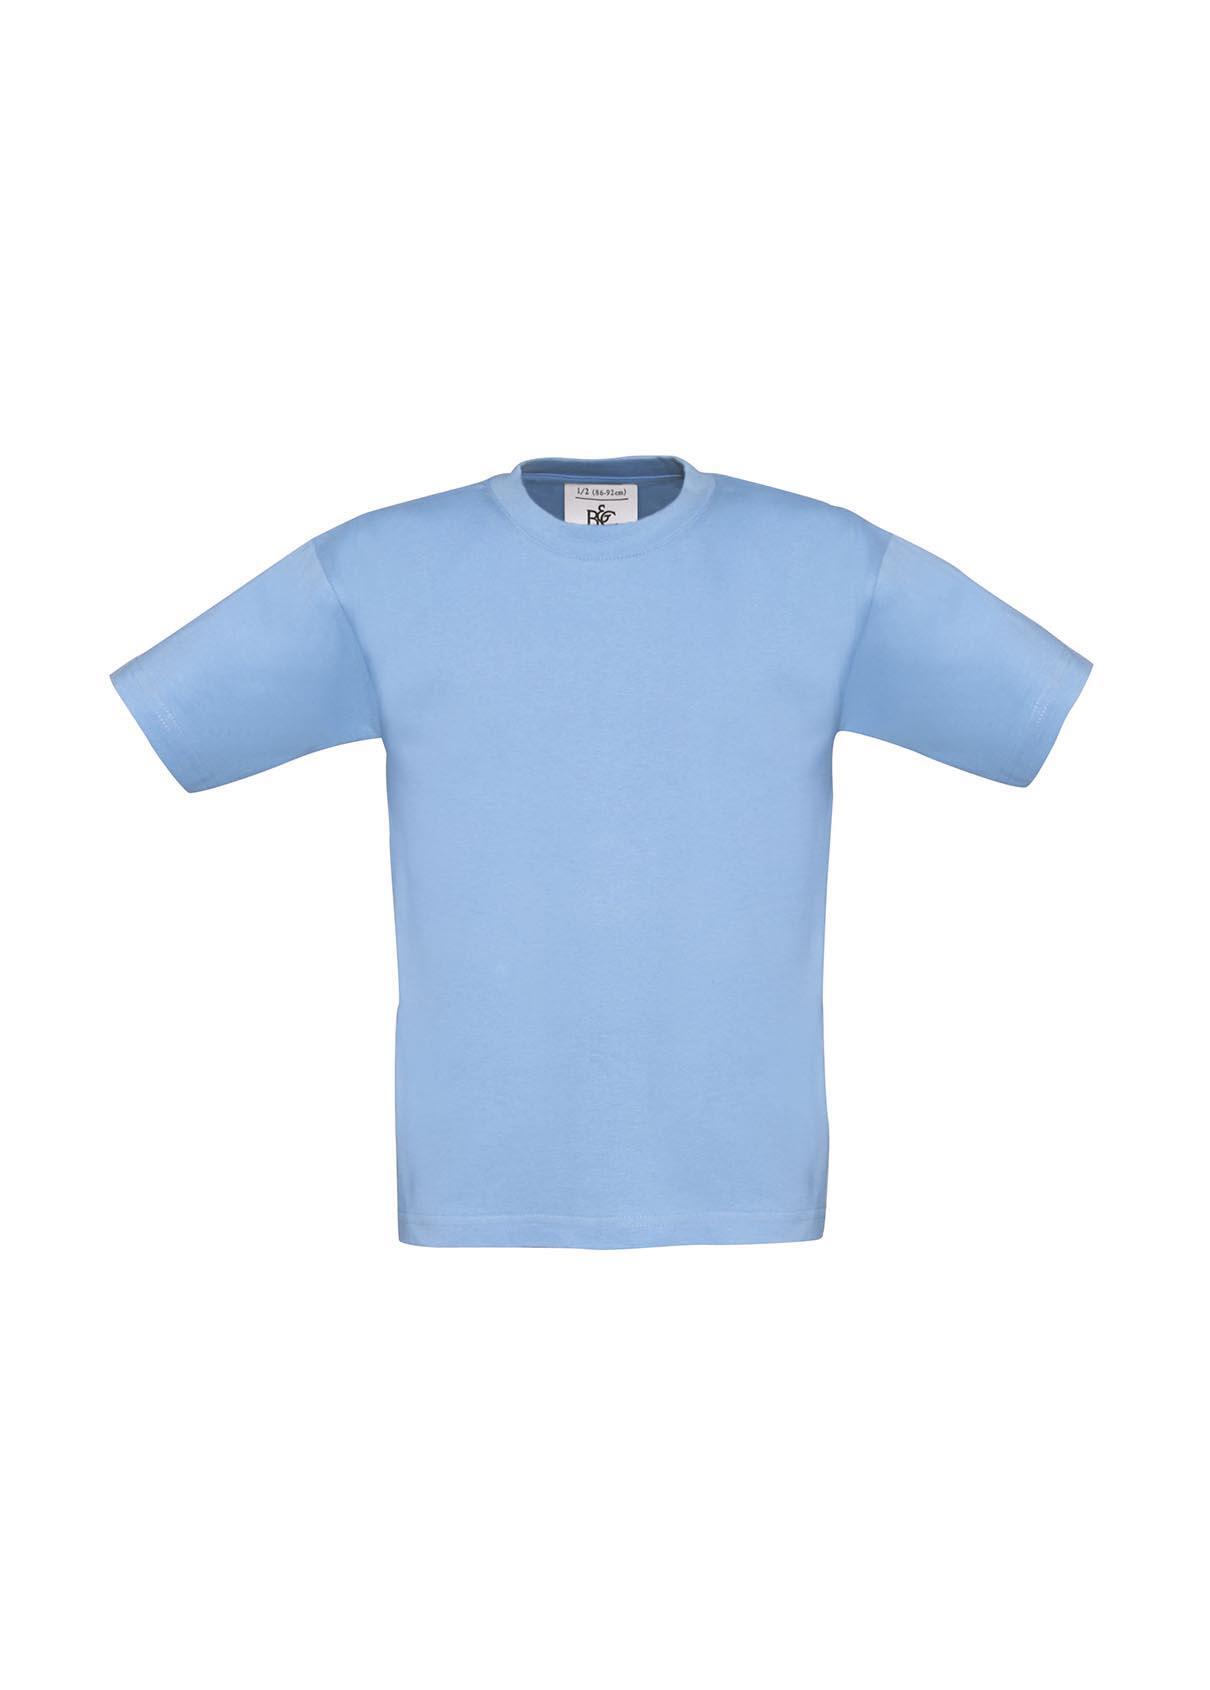 T-shirt voor kids hemelsblauw kinder shirt